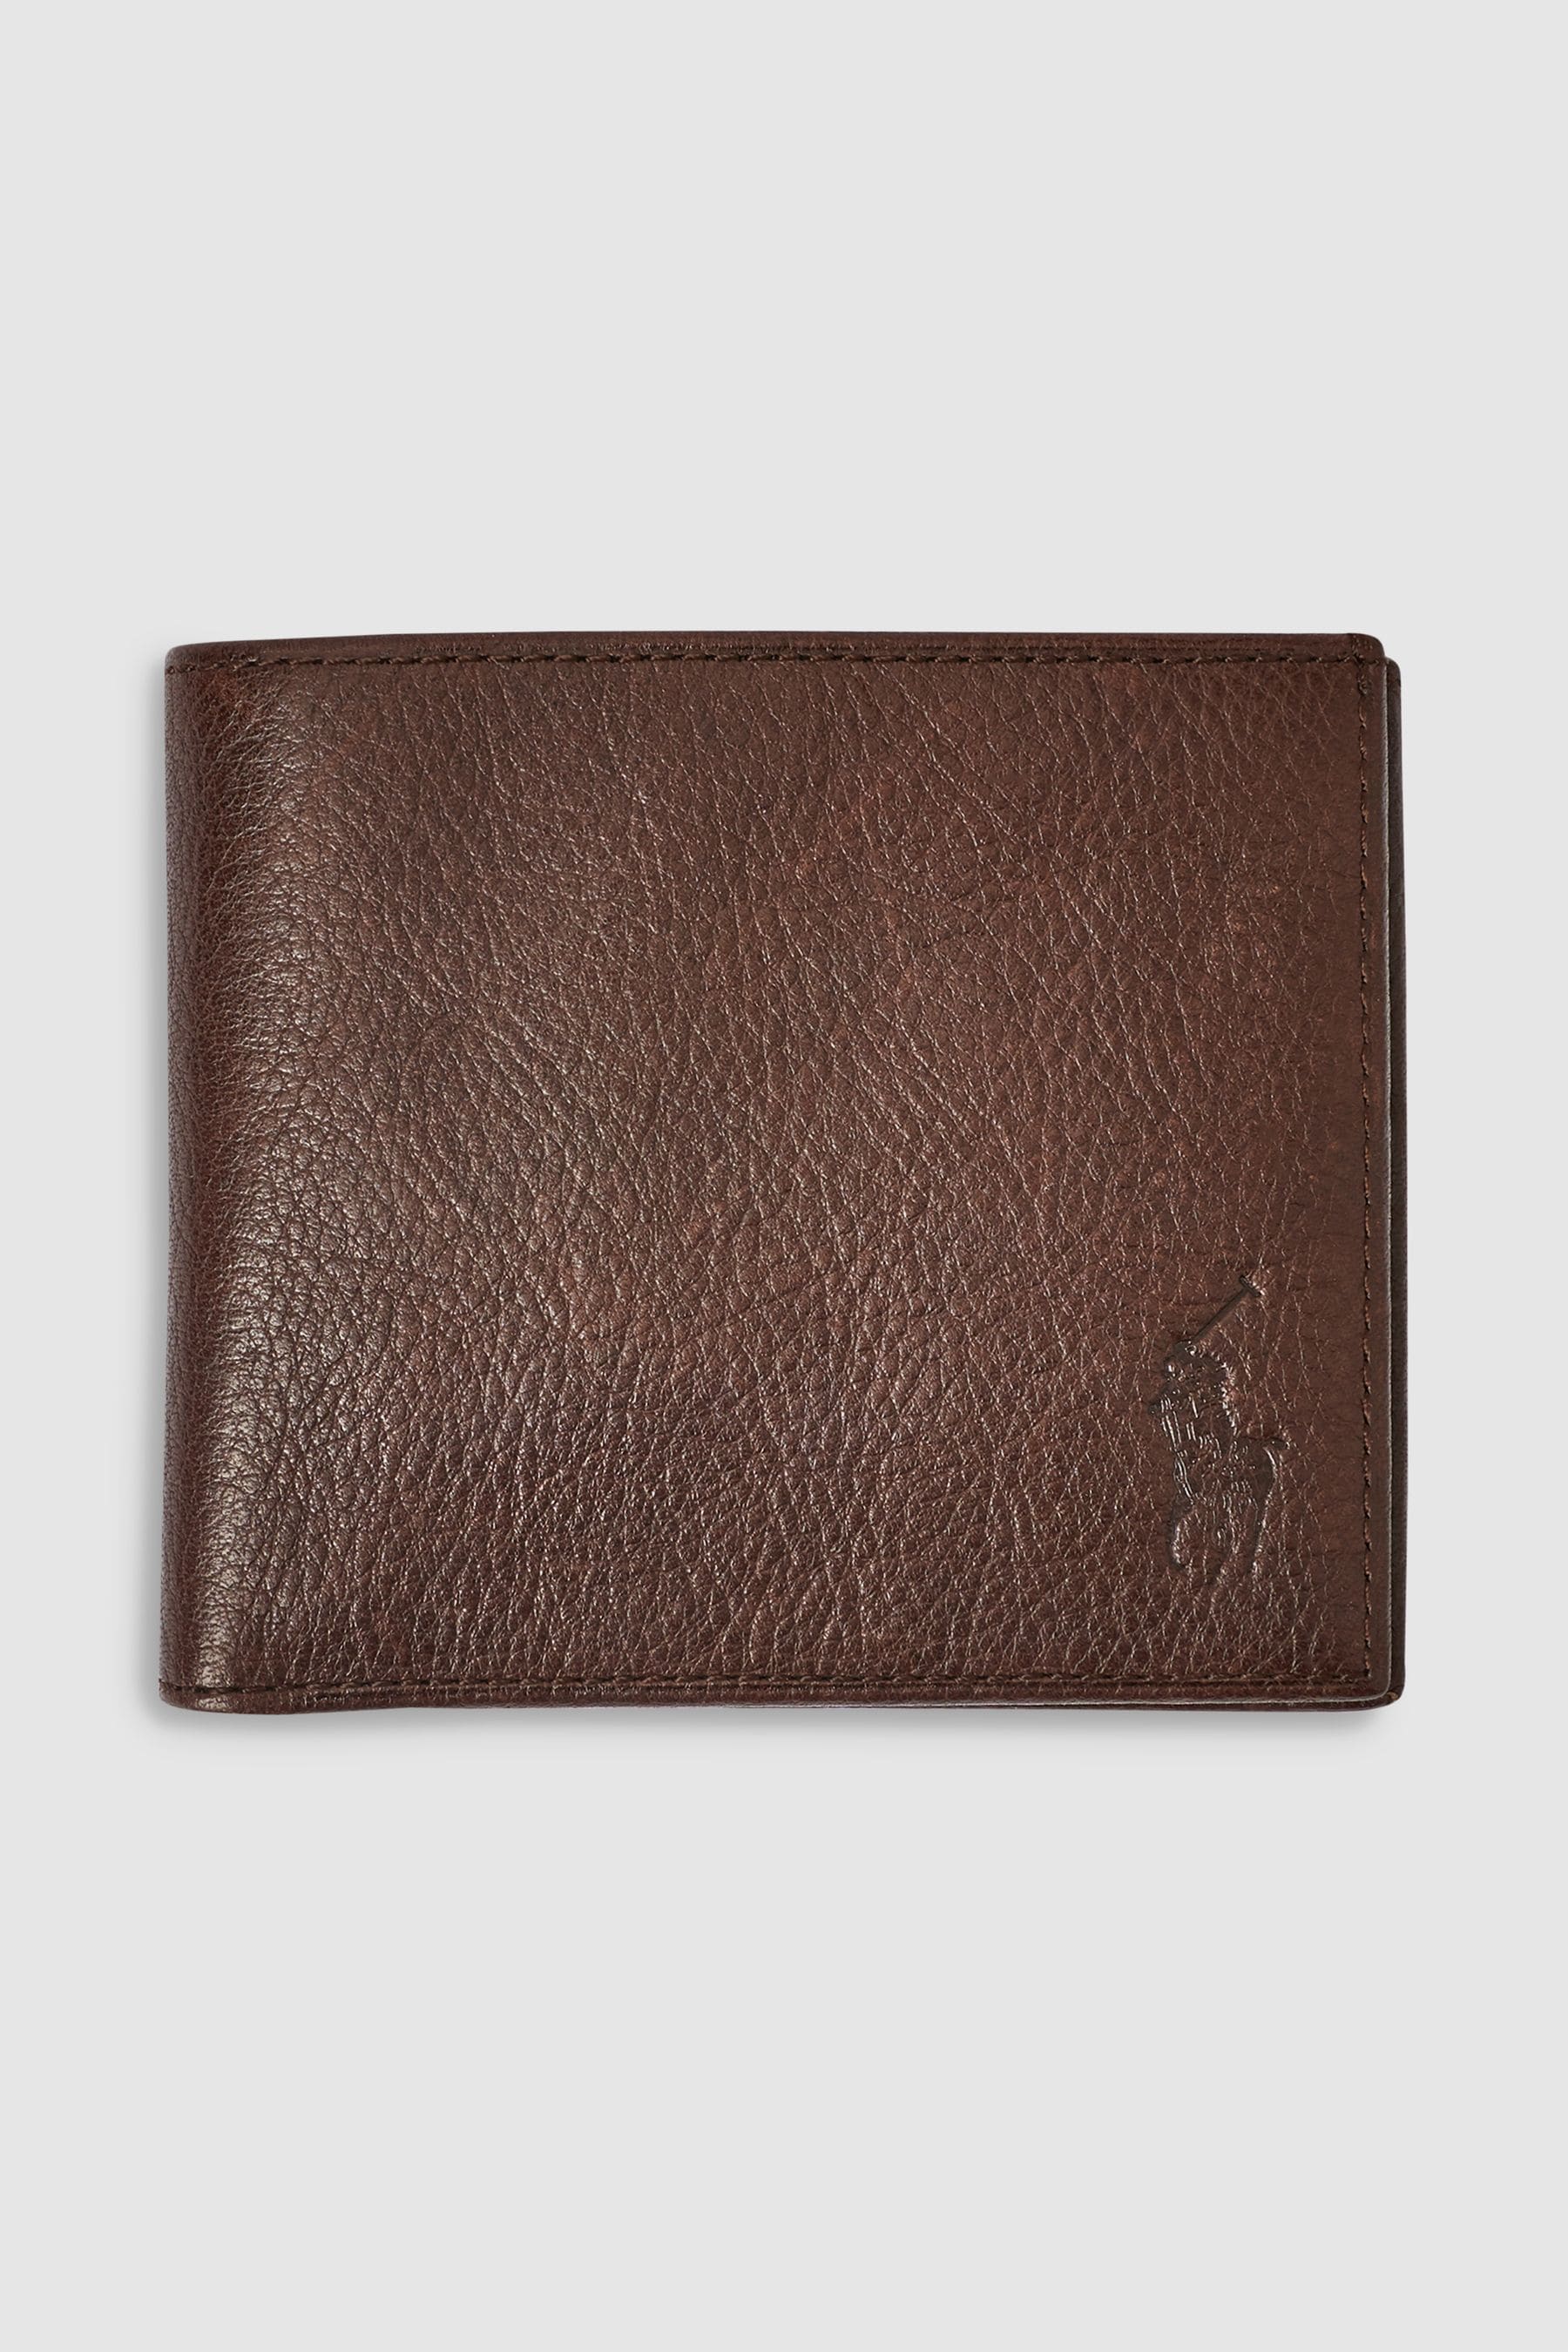 Buy Polo Ralph Lauren Leather Billfold Wallet from the Next UK online shop